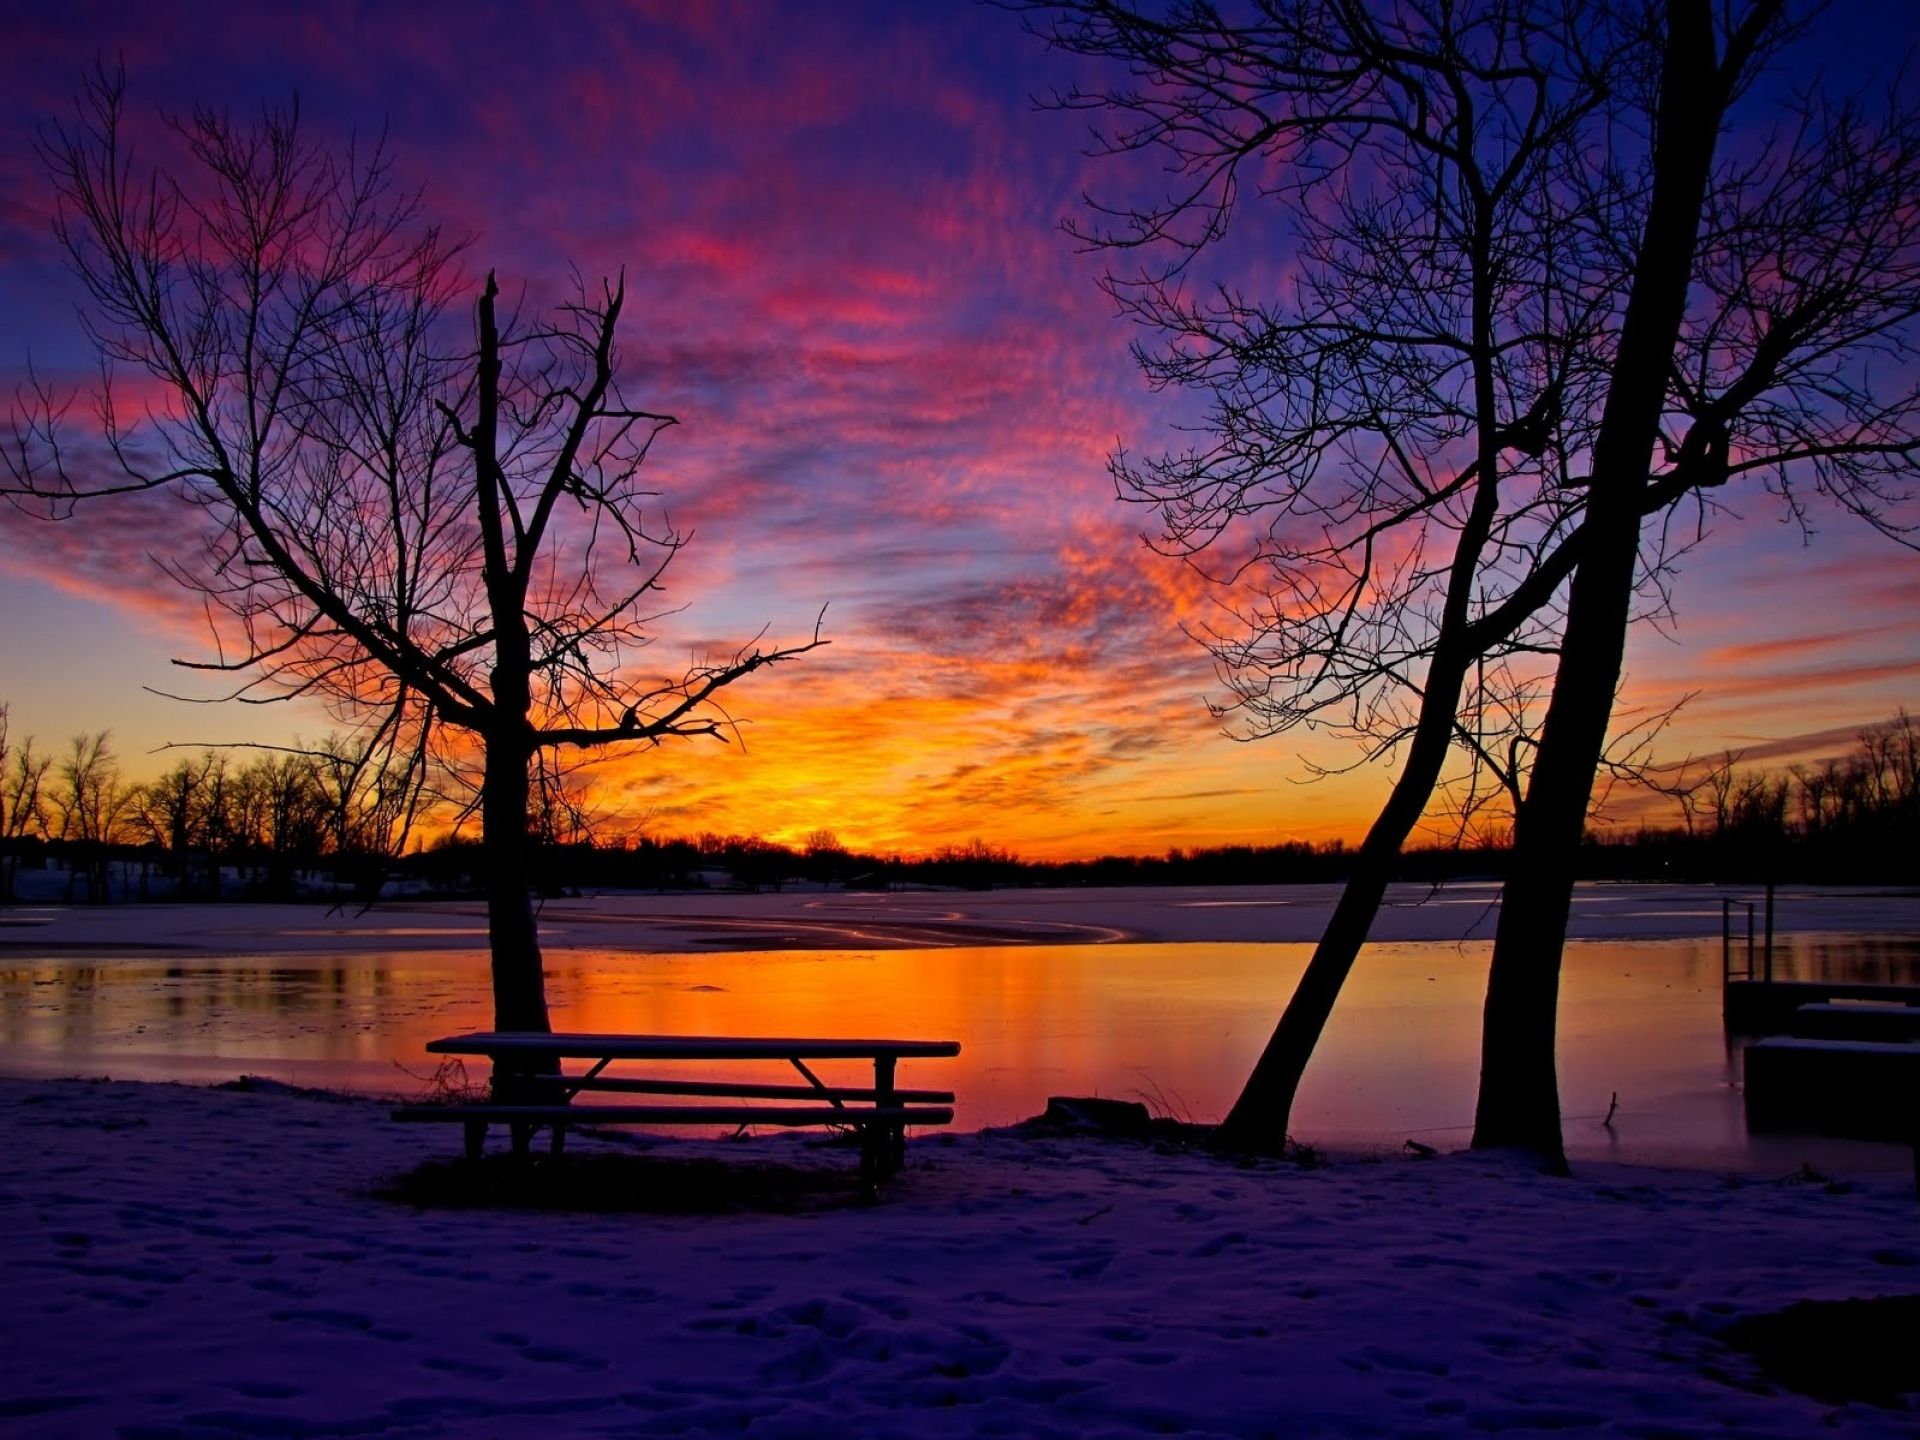 beautiful winter backgrounds - Google Search | Art | Pinterest ...